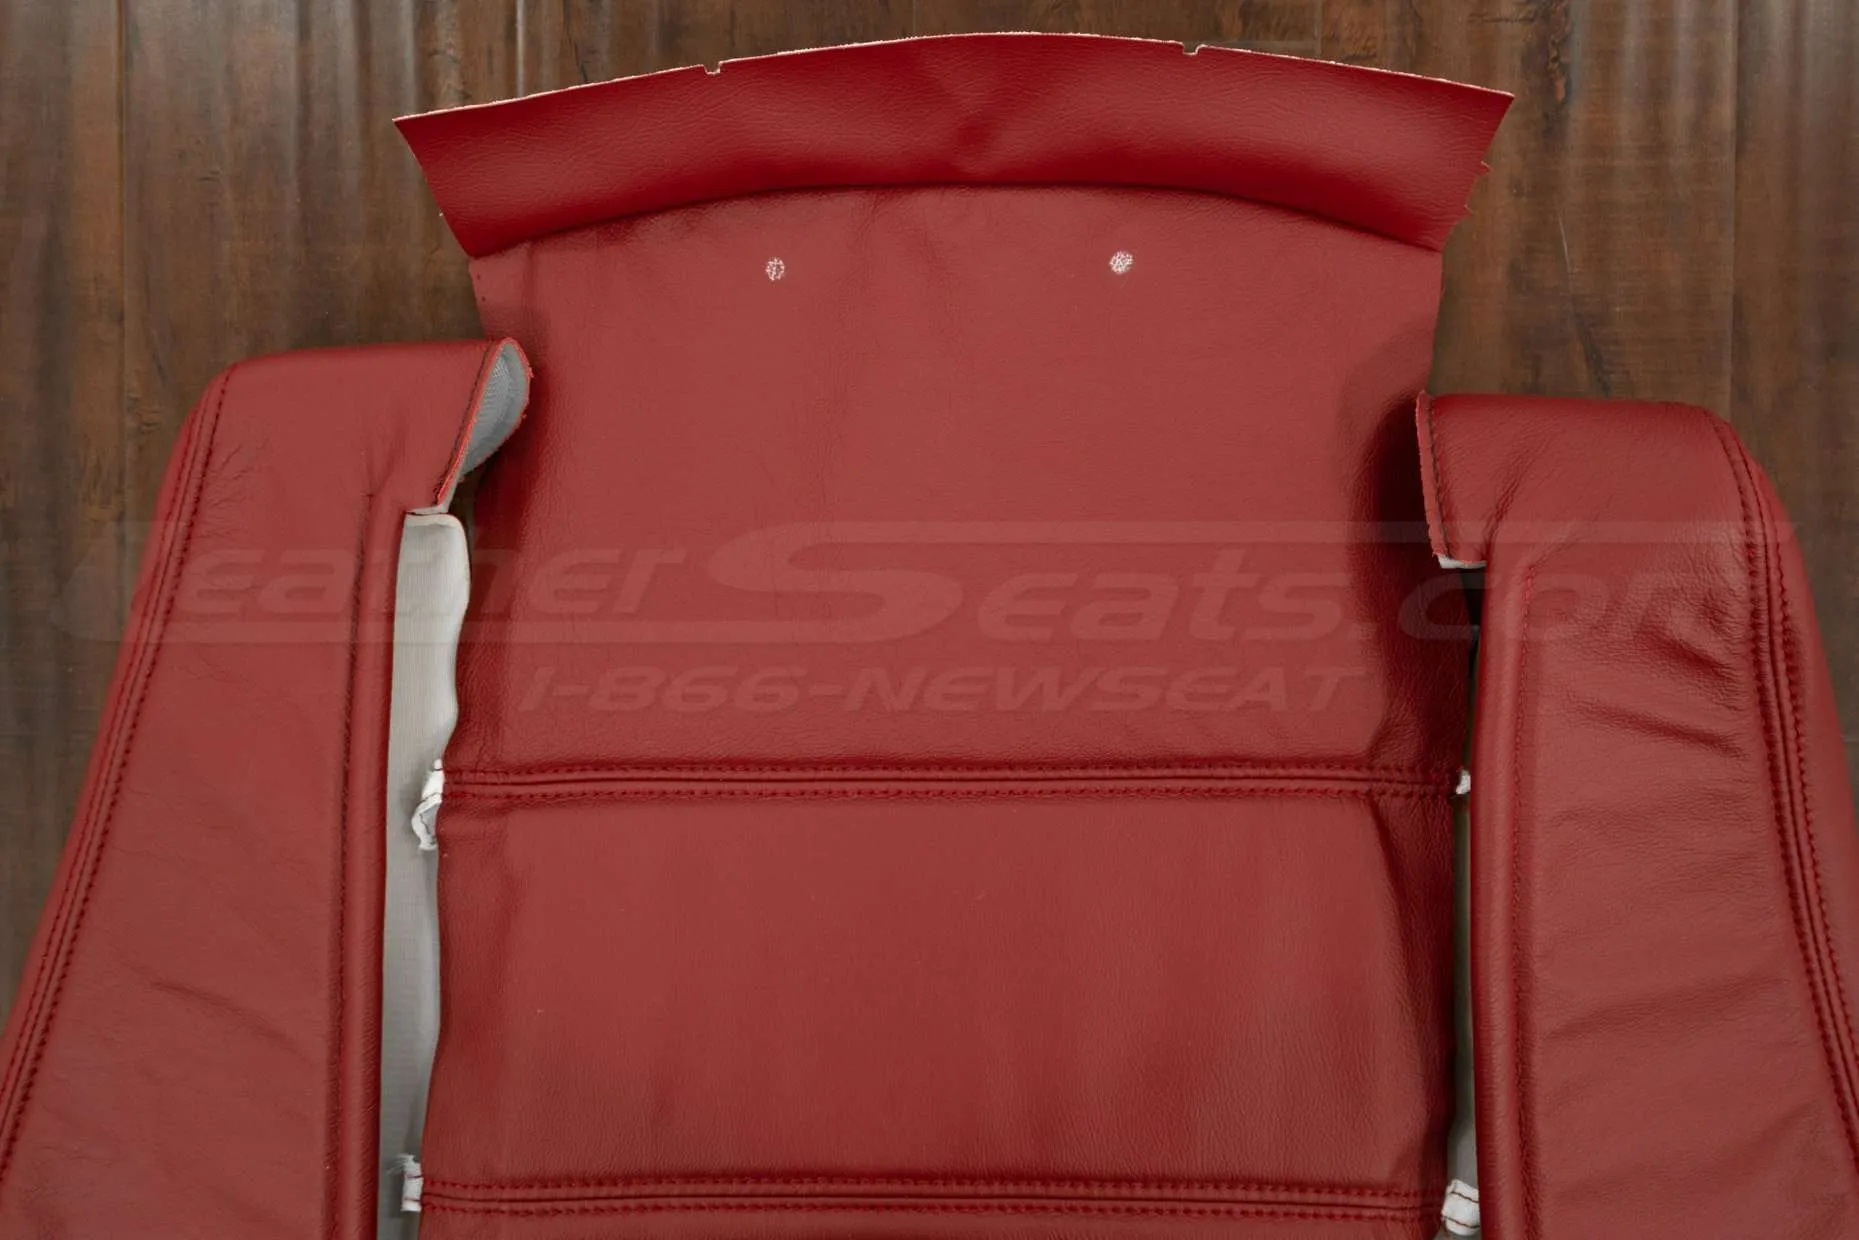 Upper section of front backrest upholstery